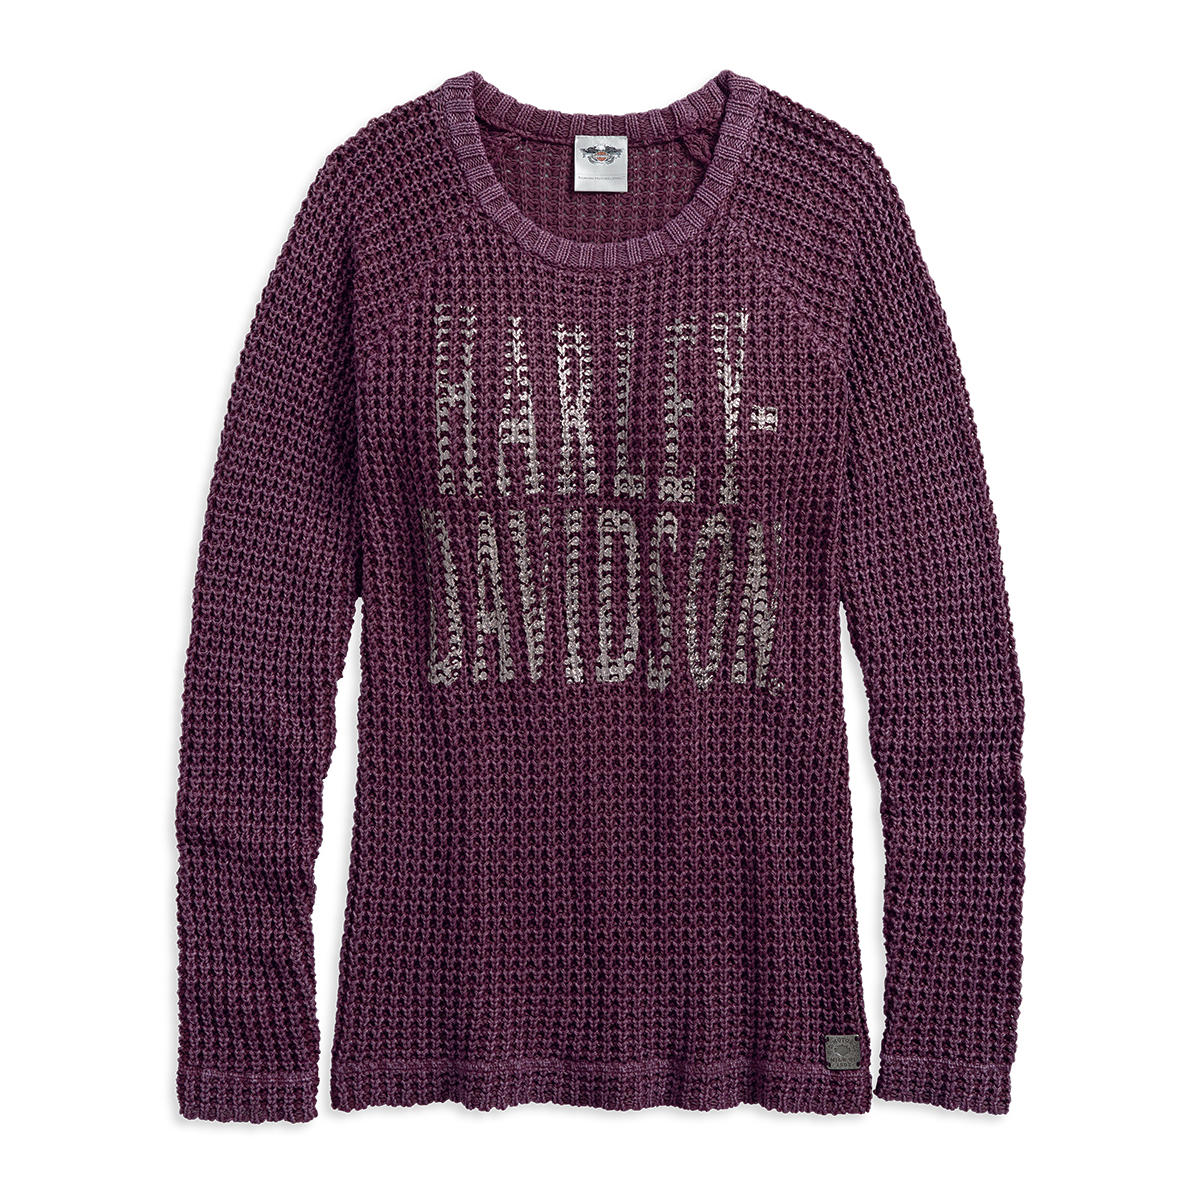 Harley-Davidson Loose Weave Acid-Washed Women's Sweater